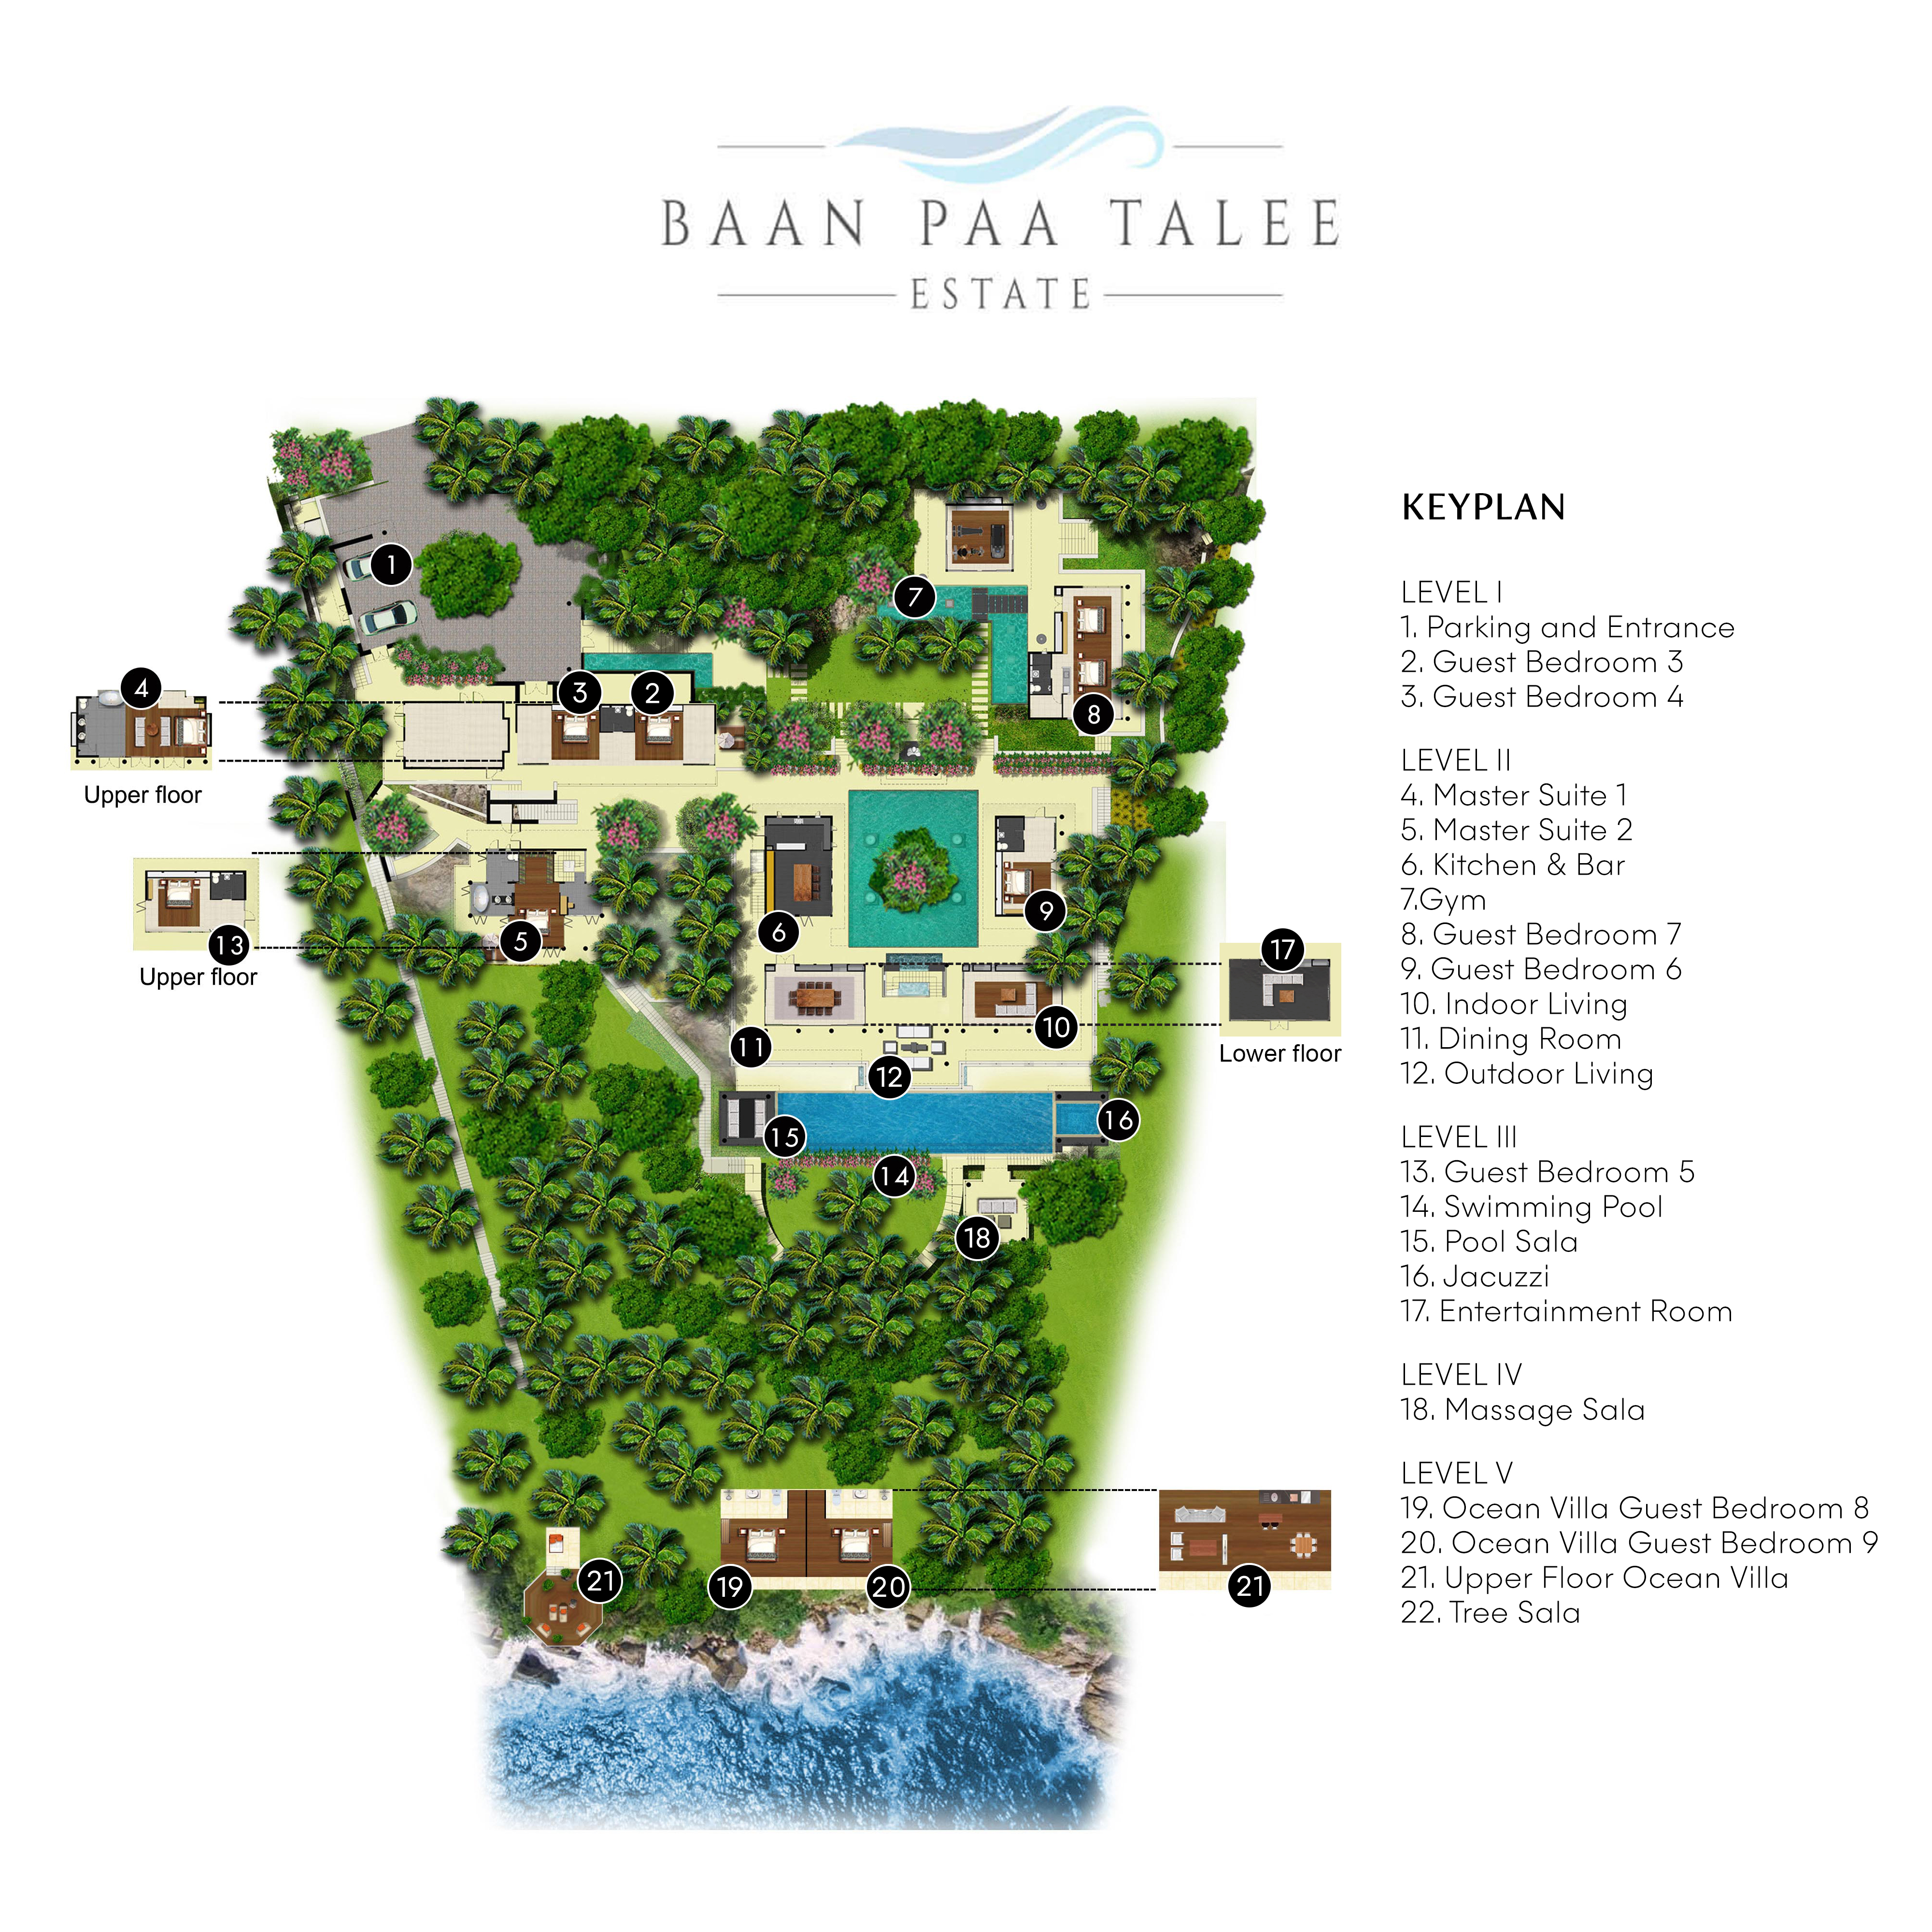 Baan Paa Talee Estate